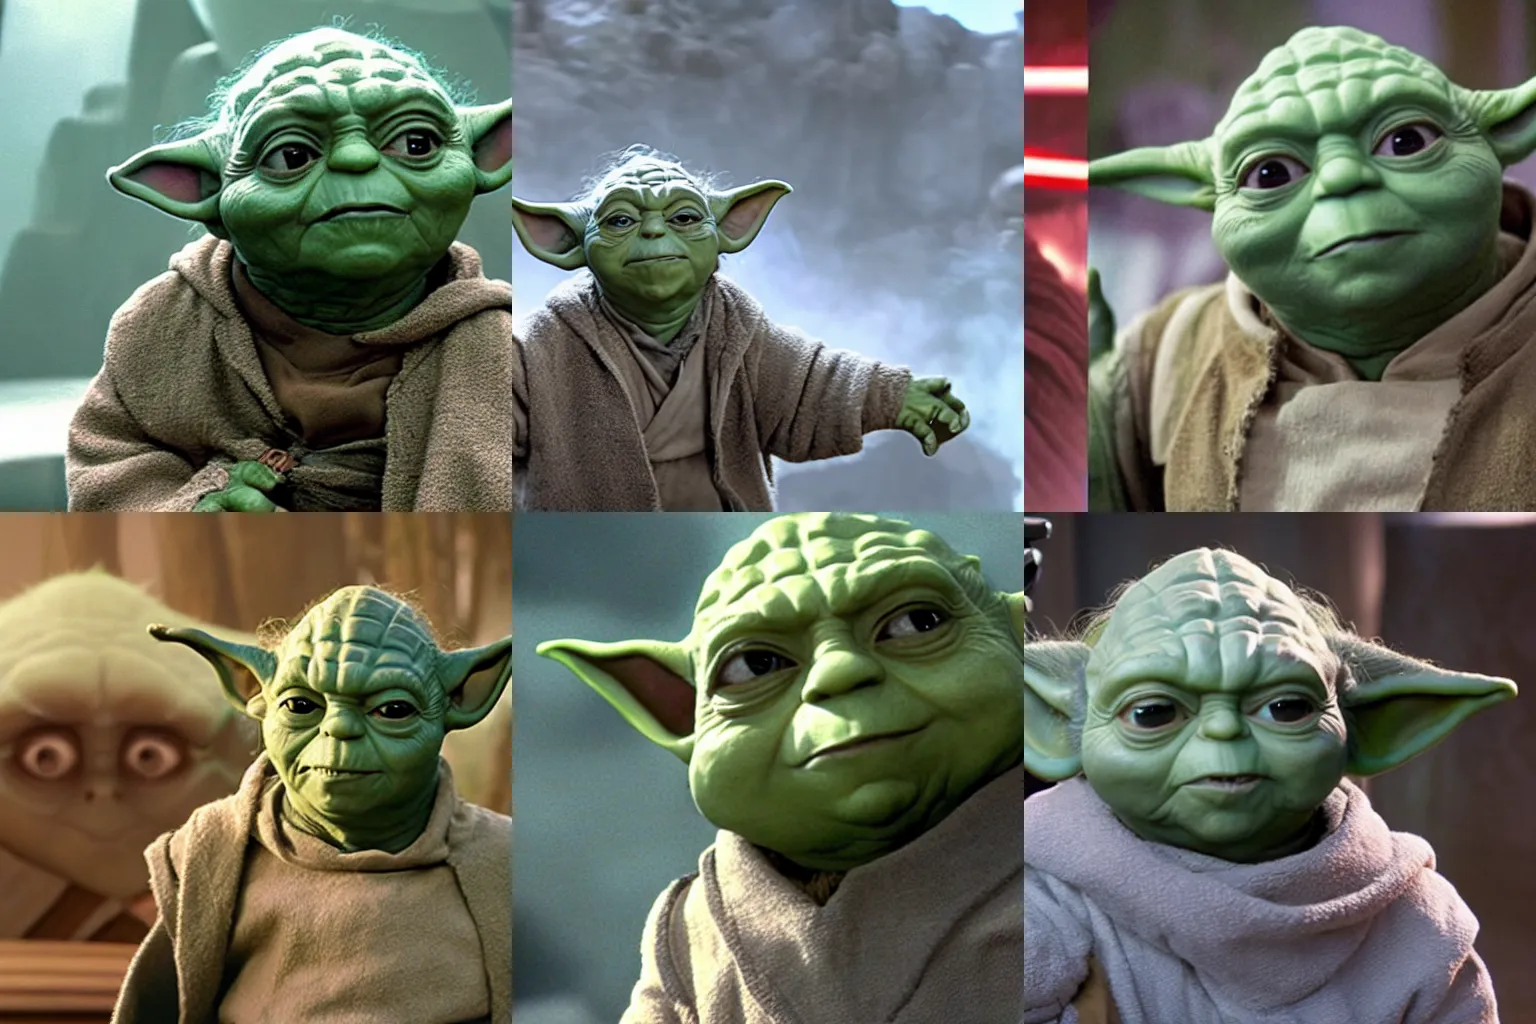 Prompt: Josh Gad as Yoda in Star Wars